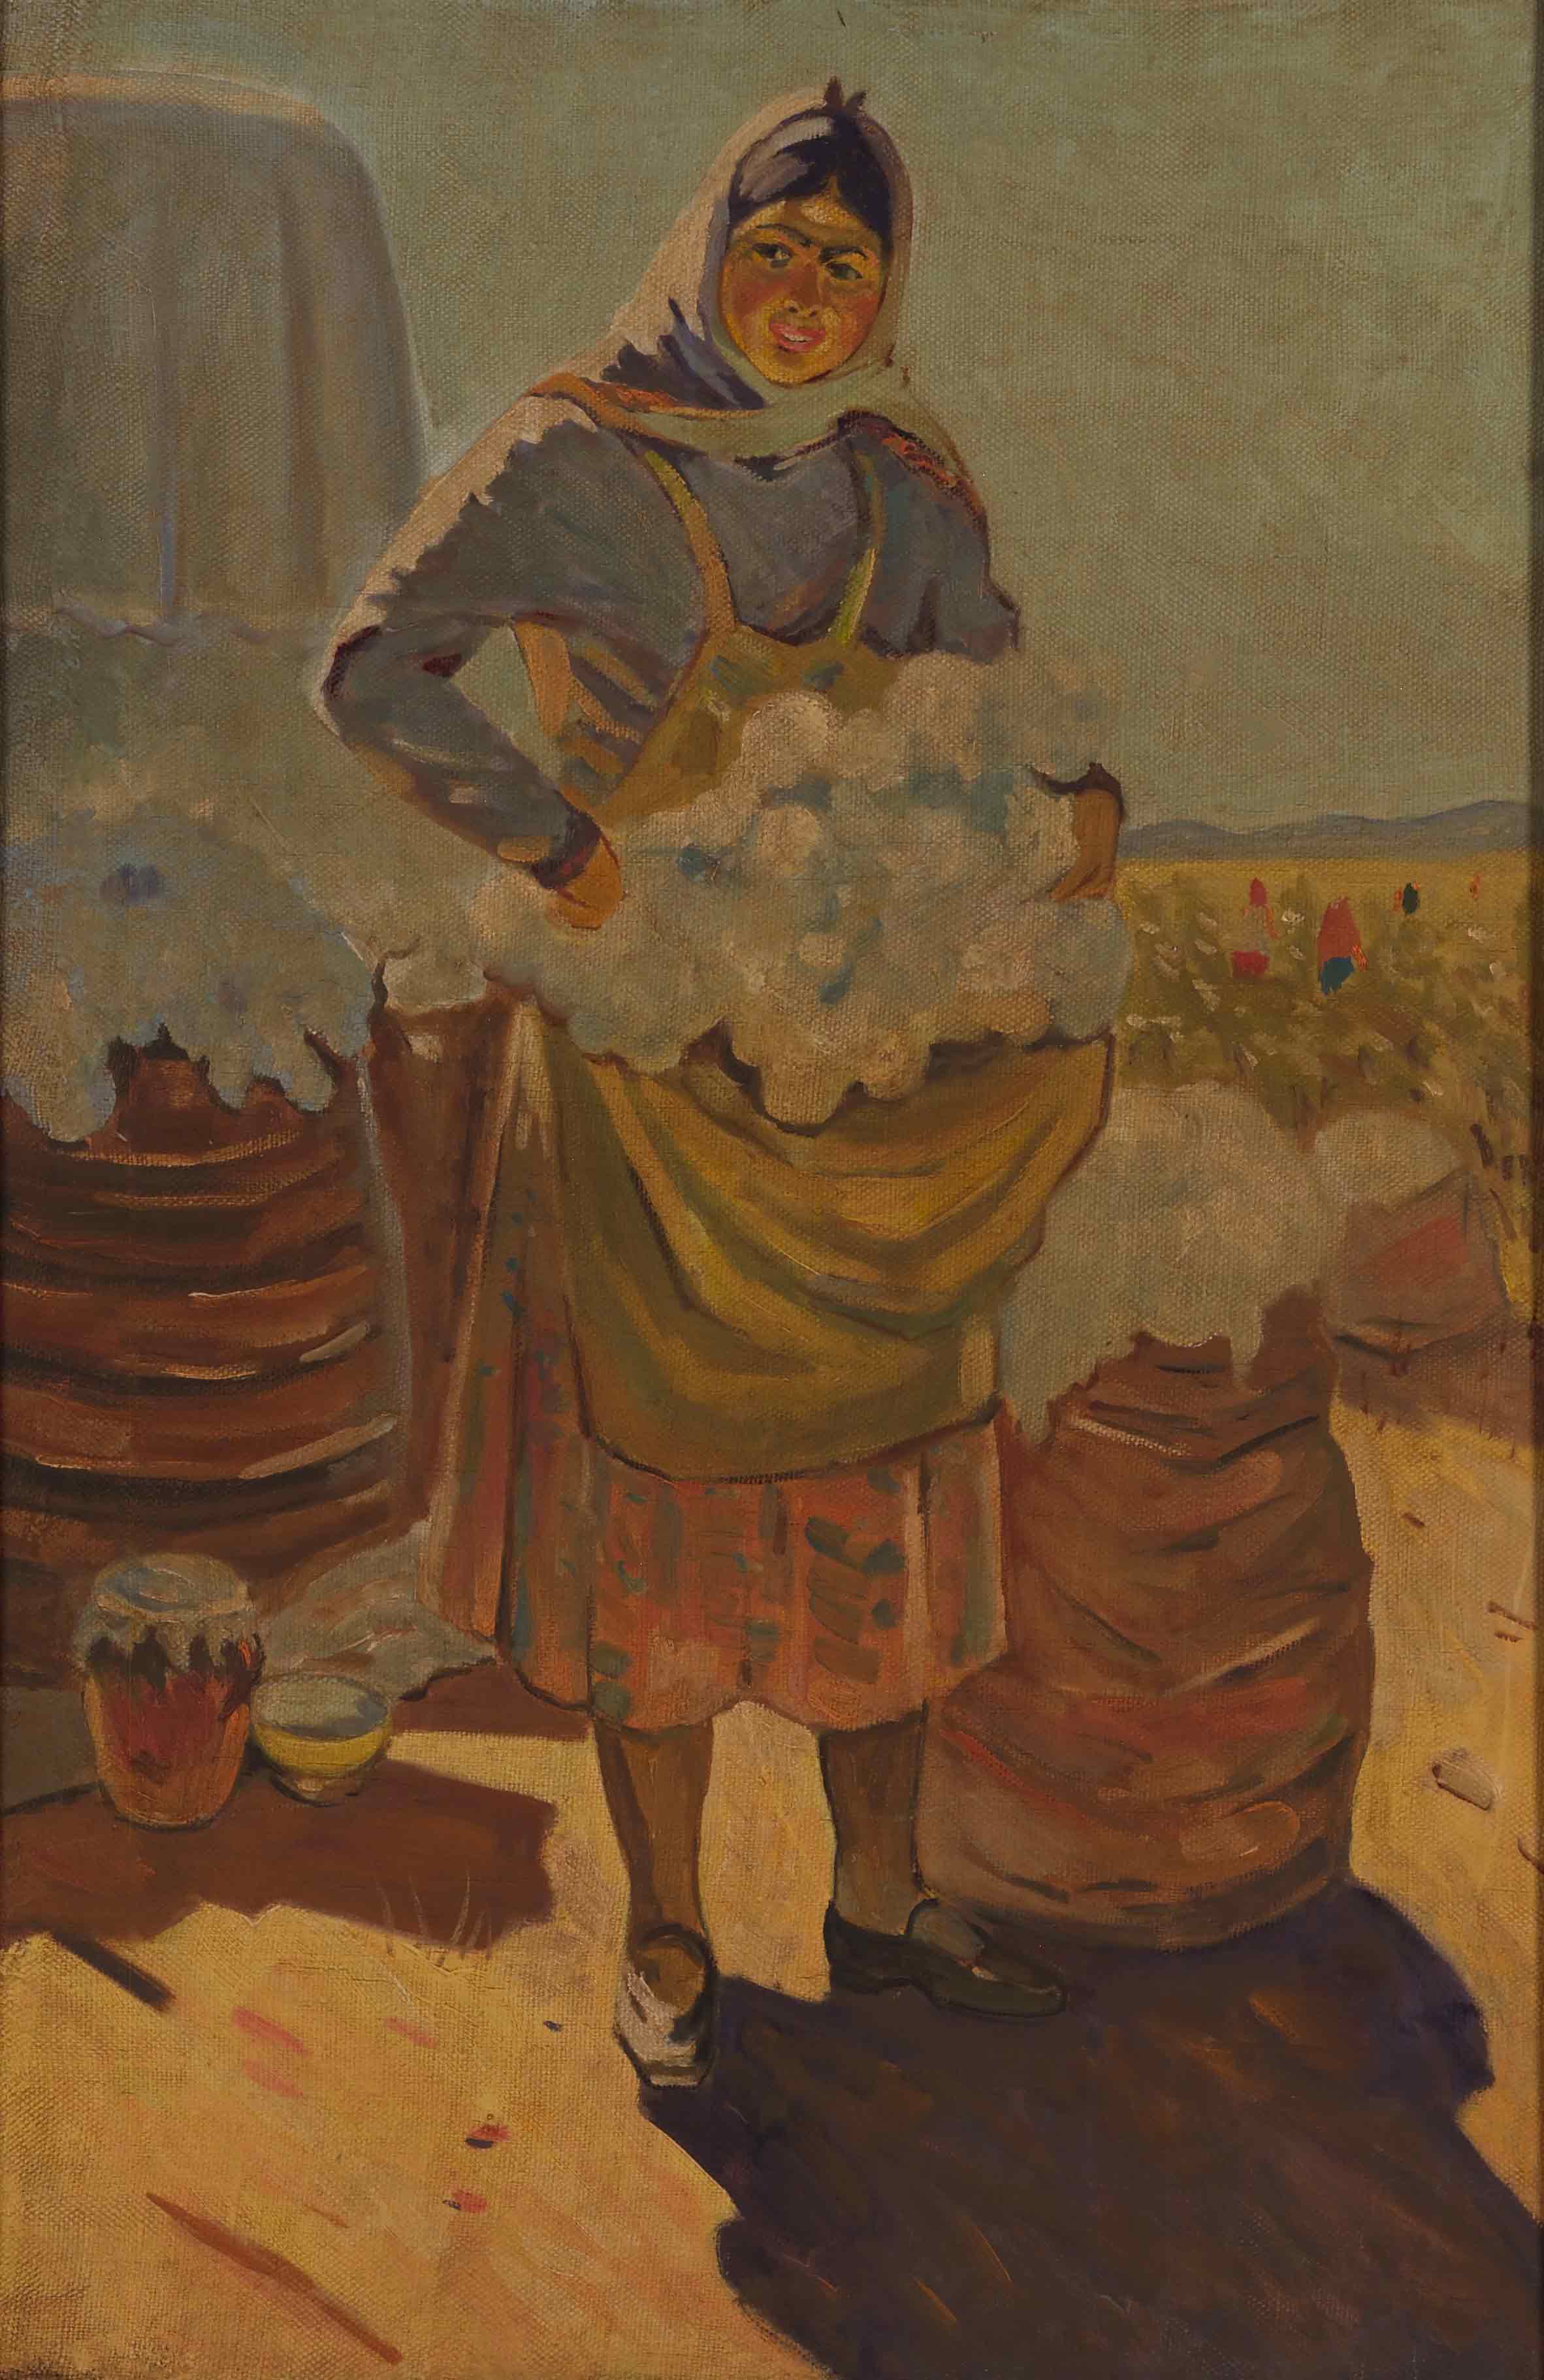 Cotton producer woman